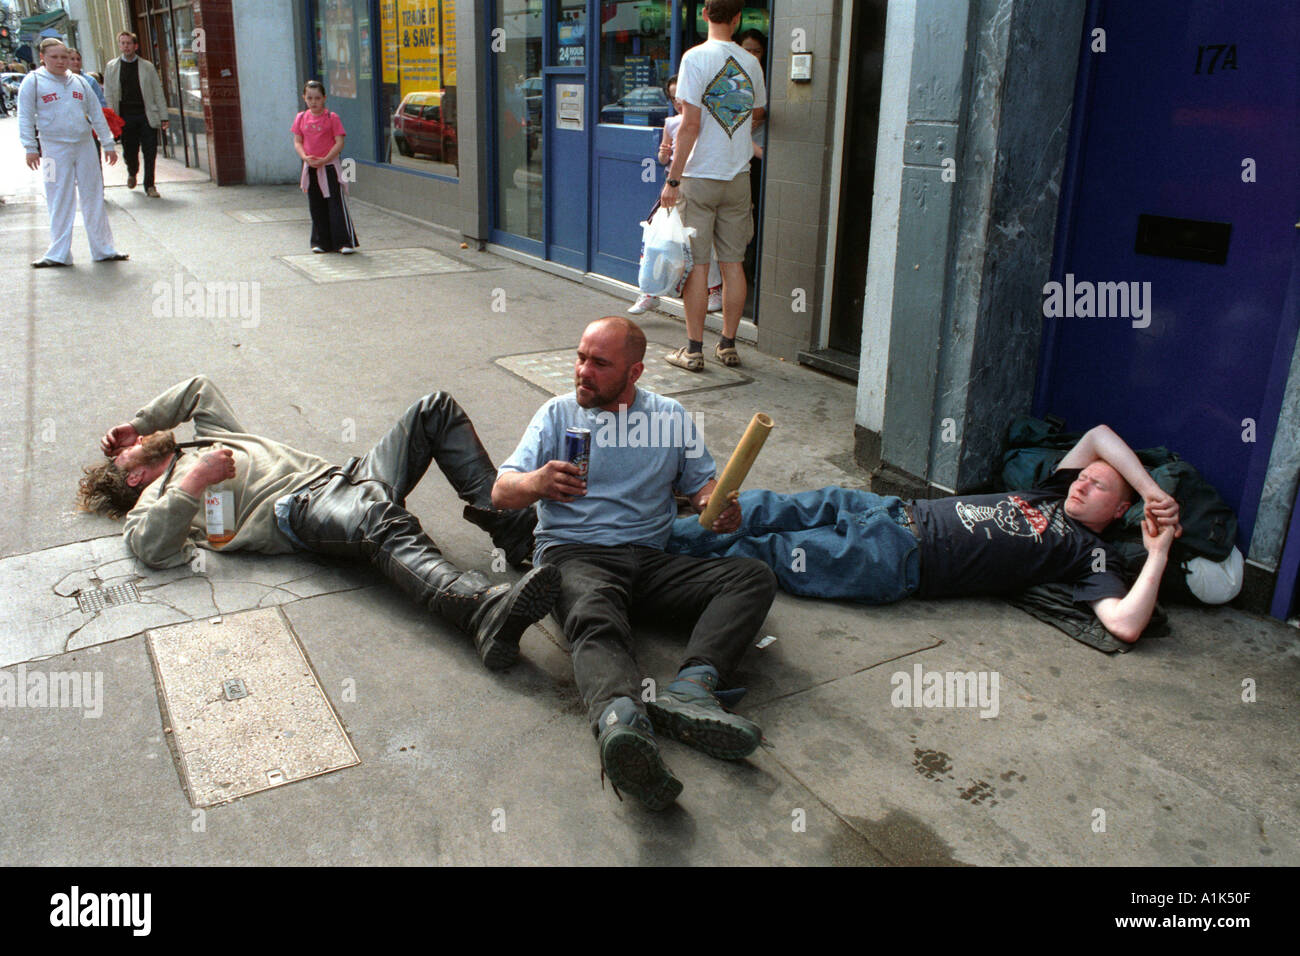 Drunken men falling over rolling on the pavement drunk. Stock Photo